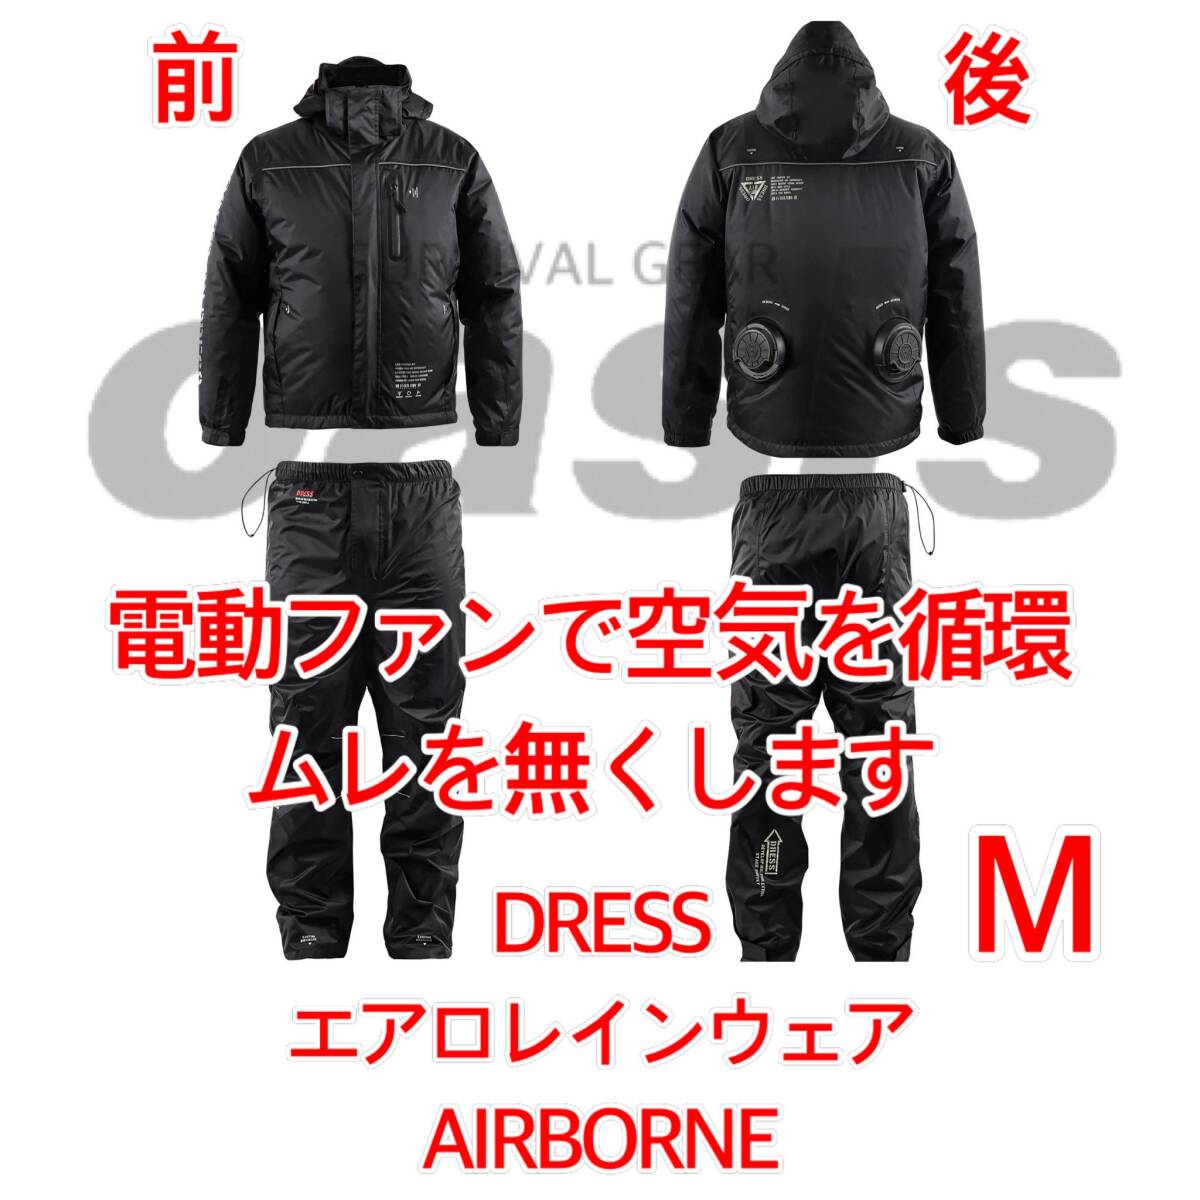 DRESS エアロレインウェア AIRBORNE Mサイズ レインウェア カッパ 空調服